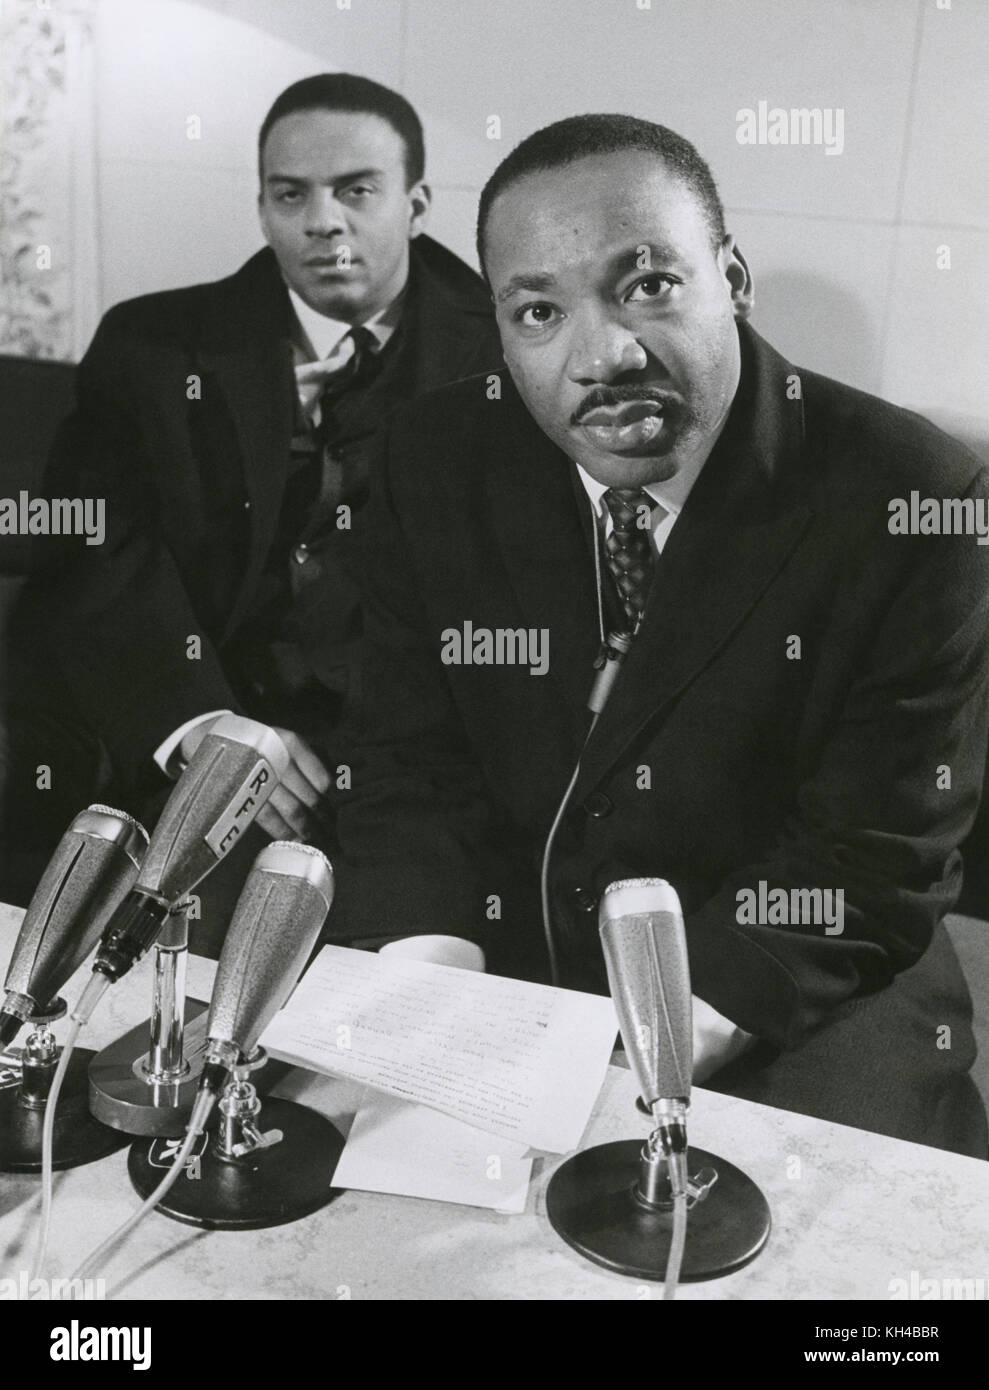 Dr. Martin Luther King, Jr. und Andrew Young während einer Pressekonferenz in Arlanda in Stockholm, Schweden, am 10th. Dezember 1964, dem Tag, an dem Dr. King den Friedensnobelpreis erhielt. Stockfoto